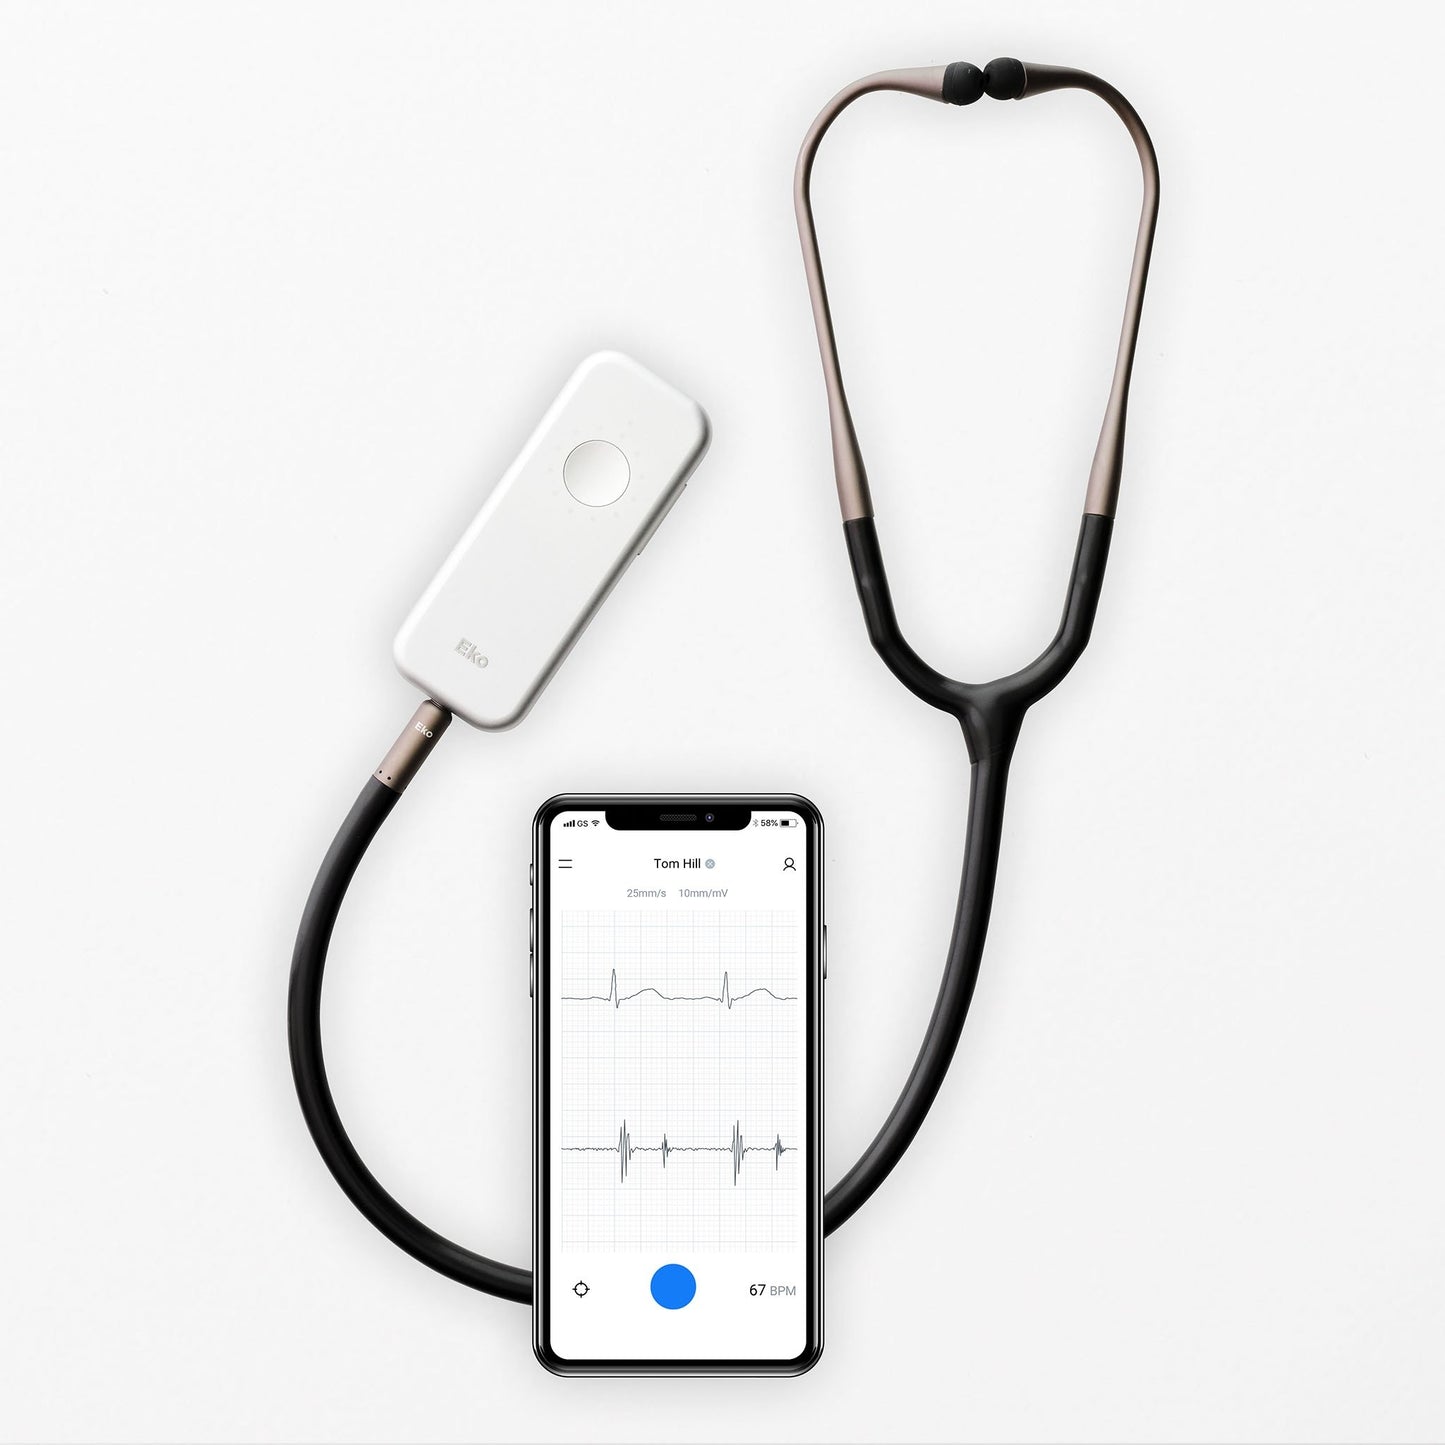 Eko DUO Portable ECG + Digital Electronic Stethoscope [Bluetooth]